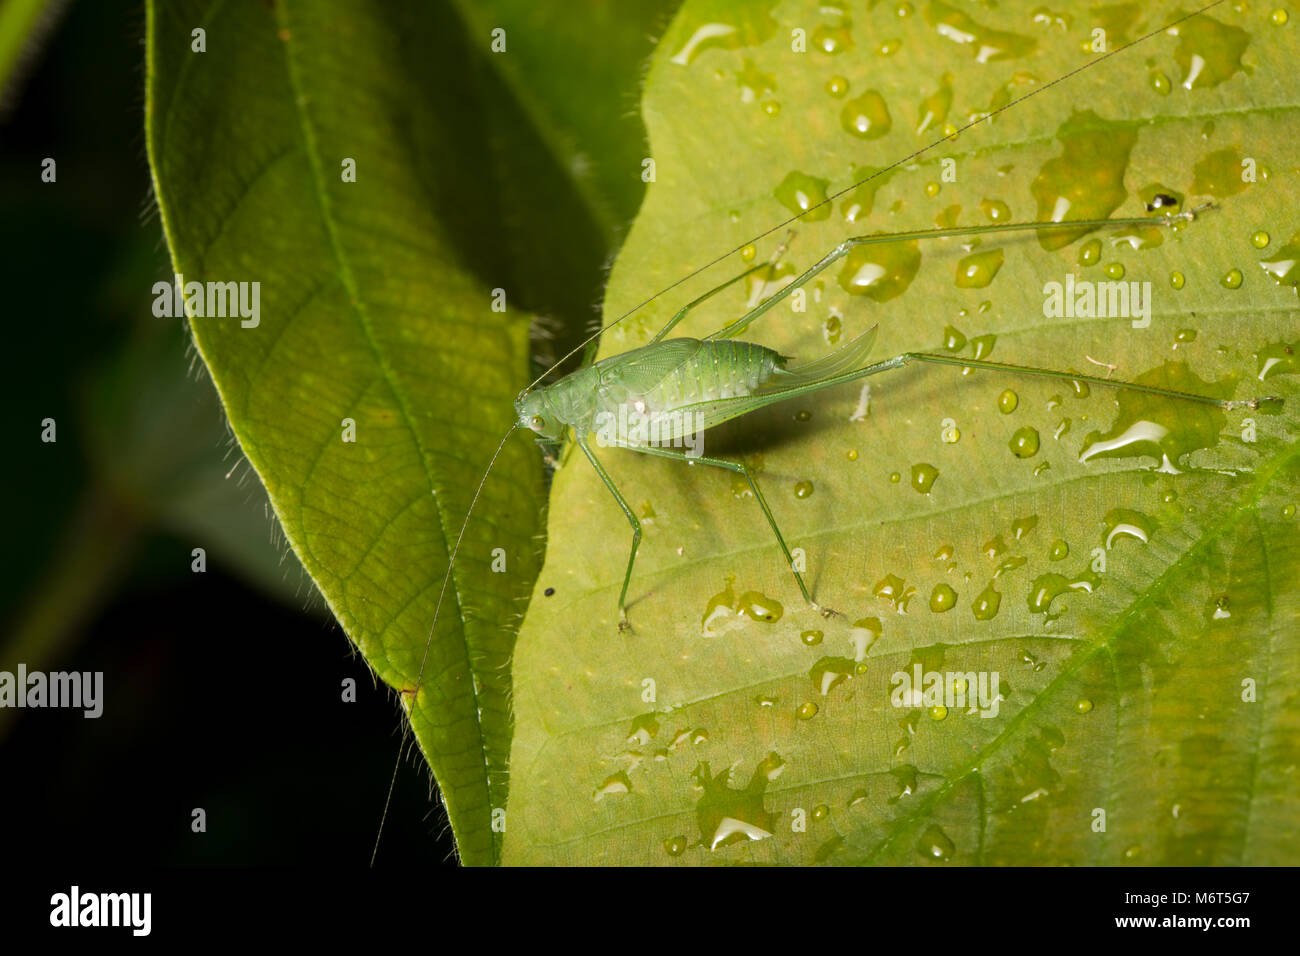 Bush Cricket oder katydid, Suriname, Südamerika Stockfoto